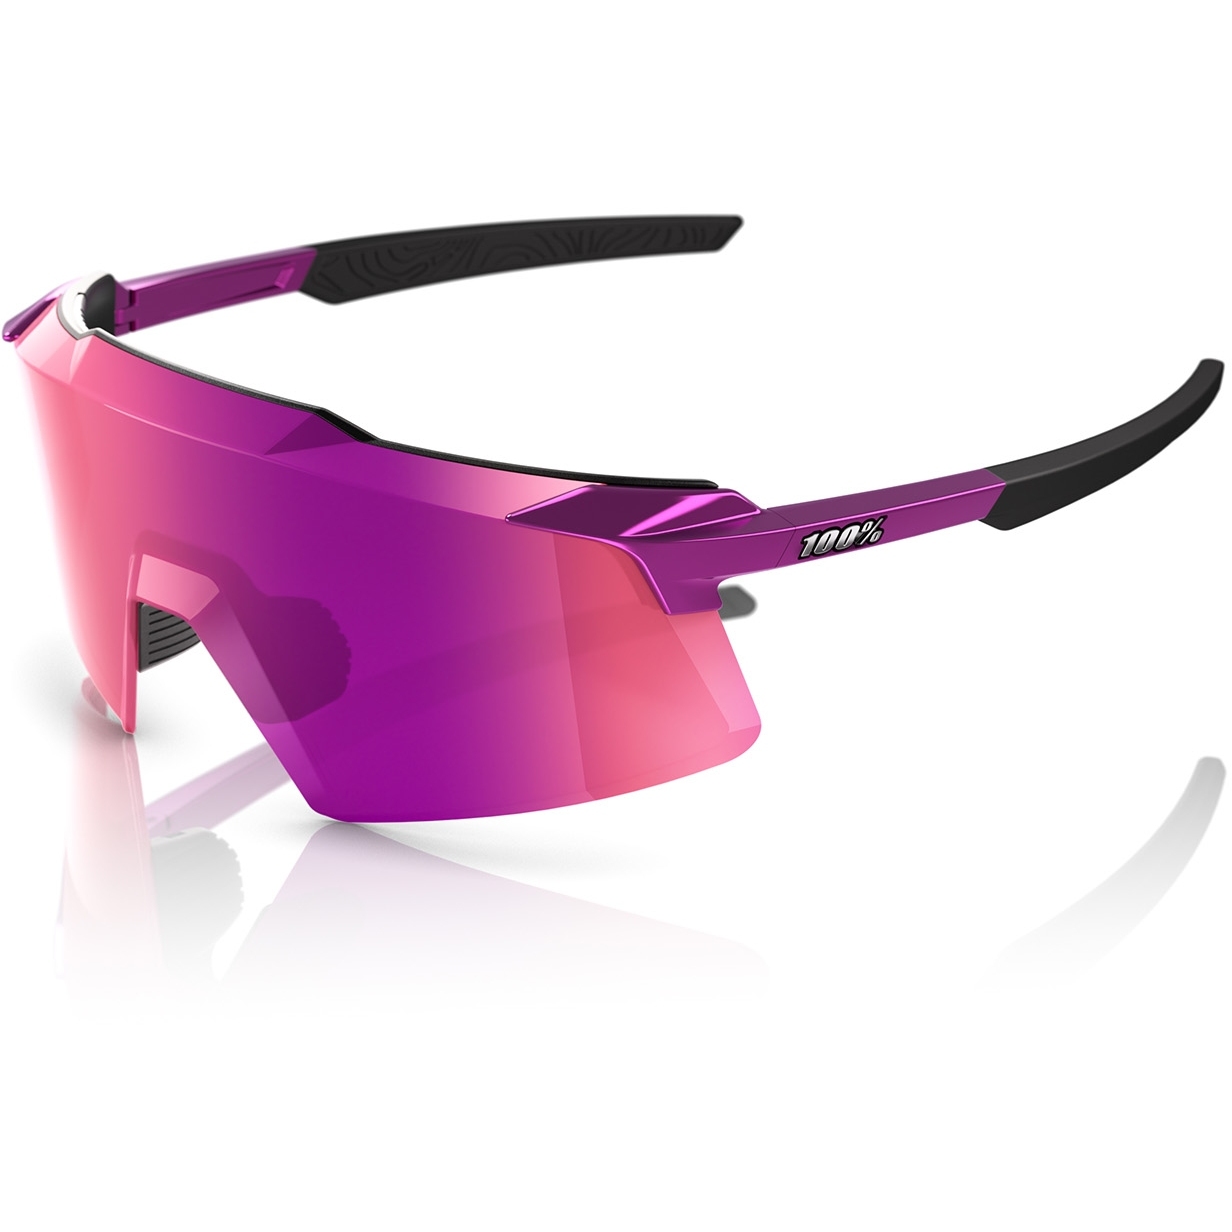 Productfoto van 100% Aerocraft Multilayer Mirror Bril - Gloss Purple Chrome / Purple